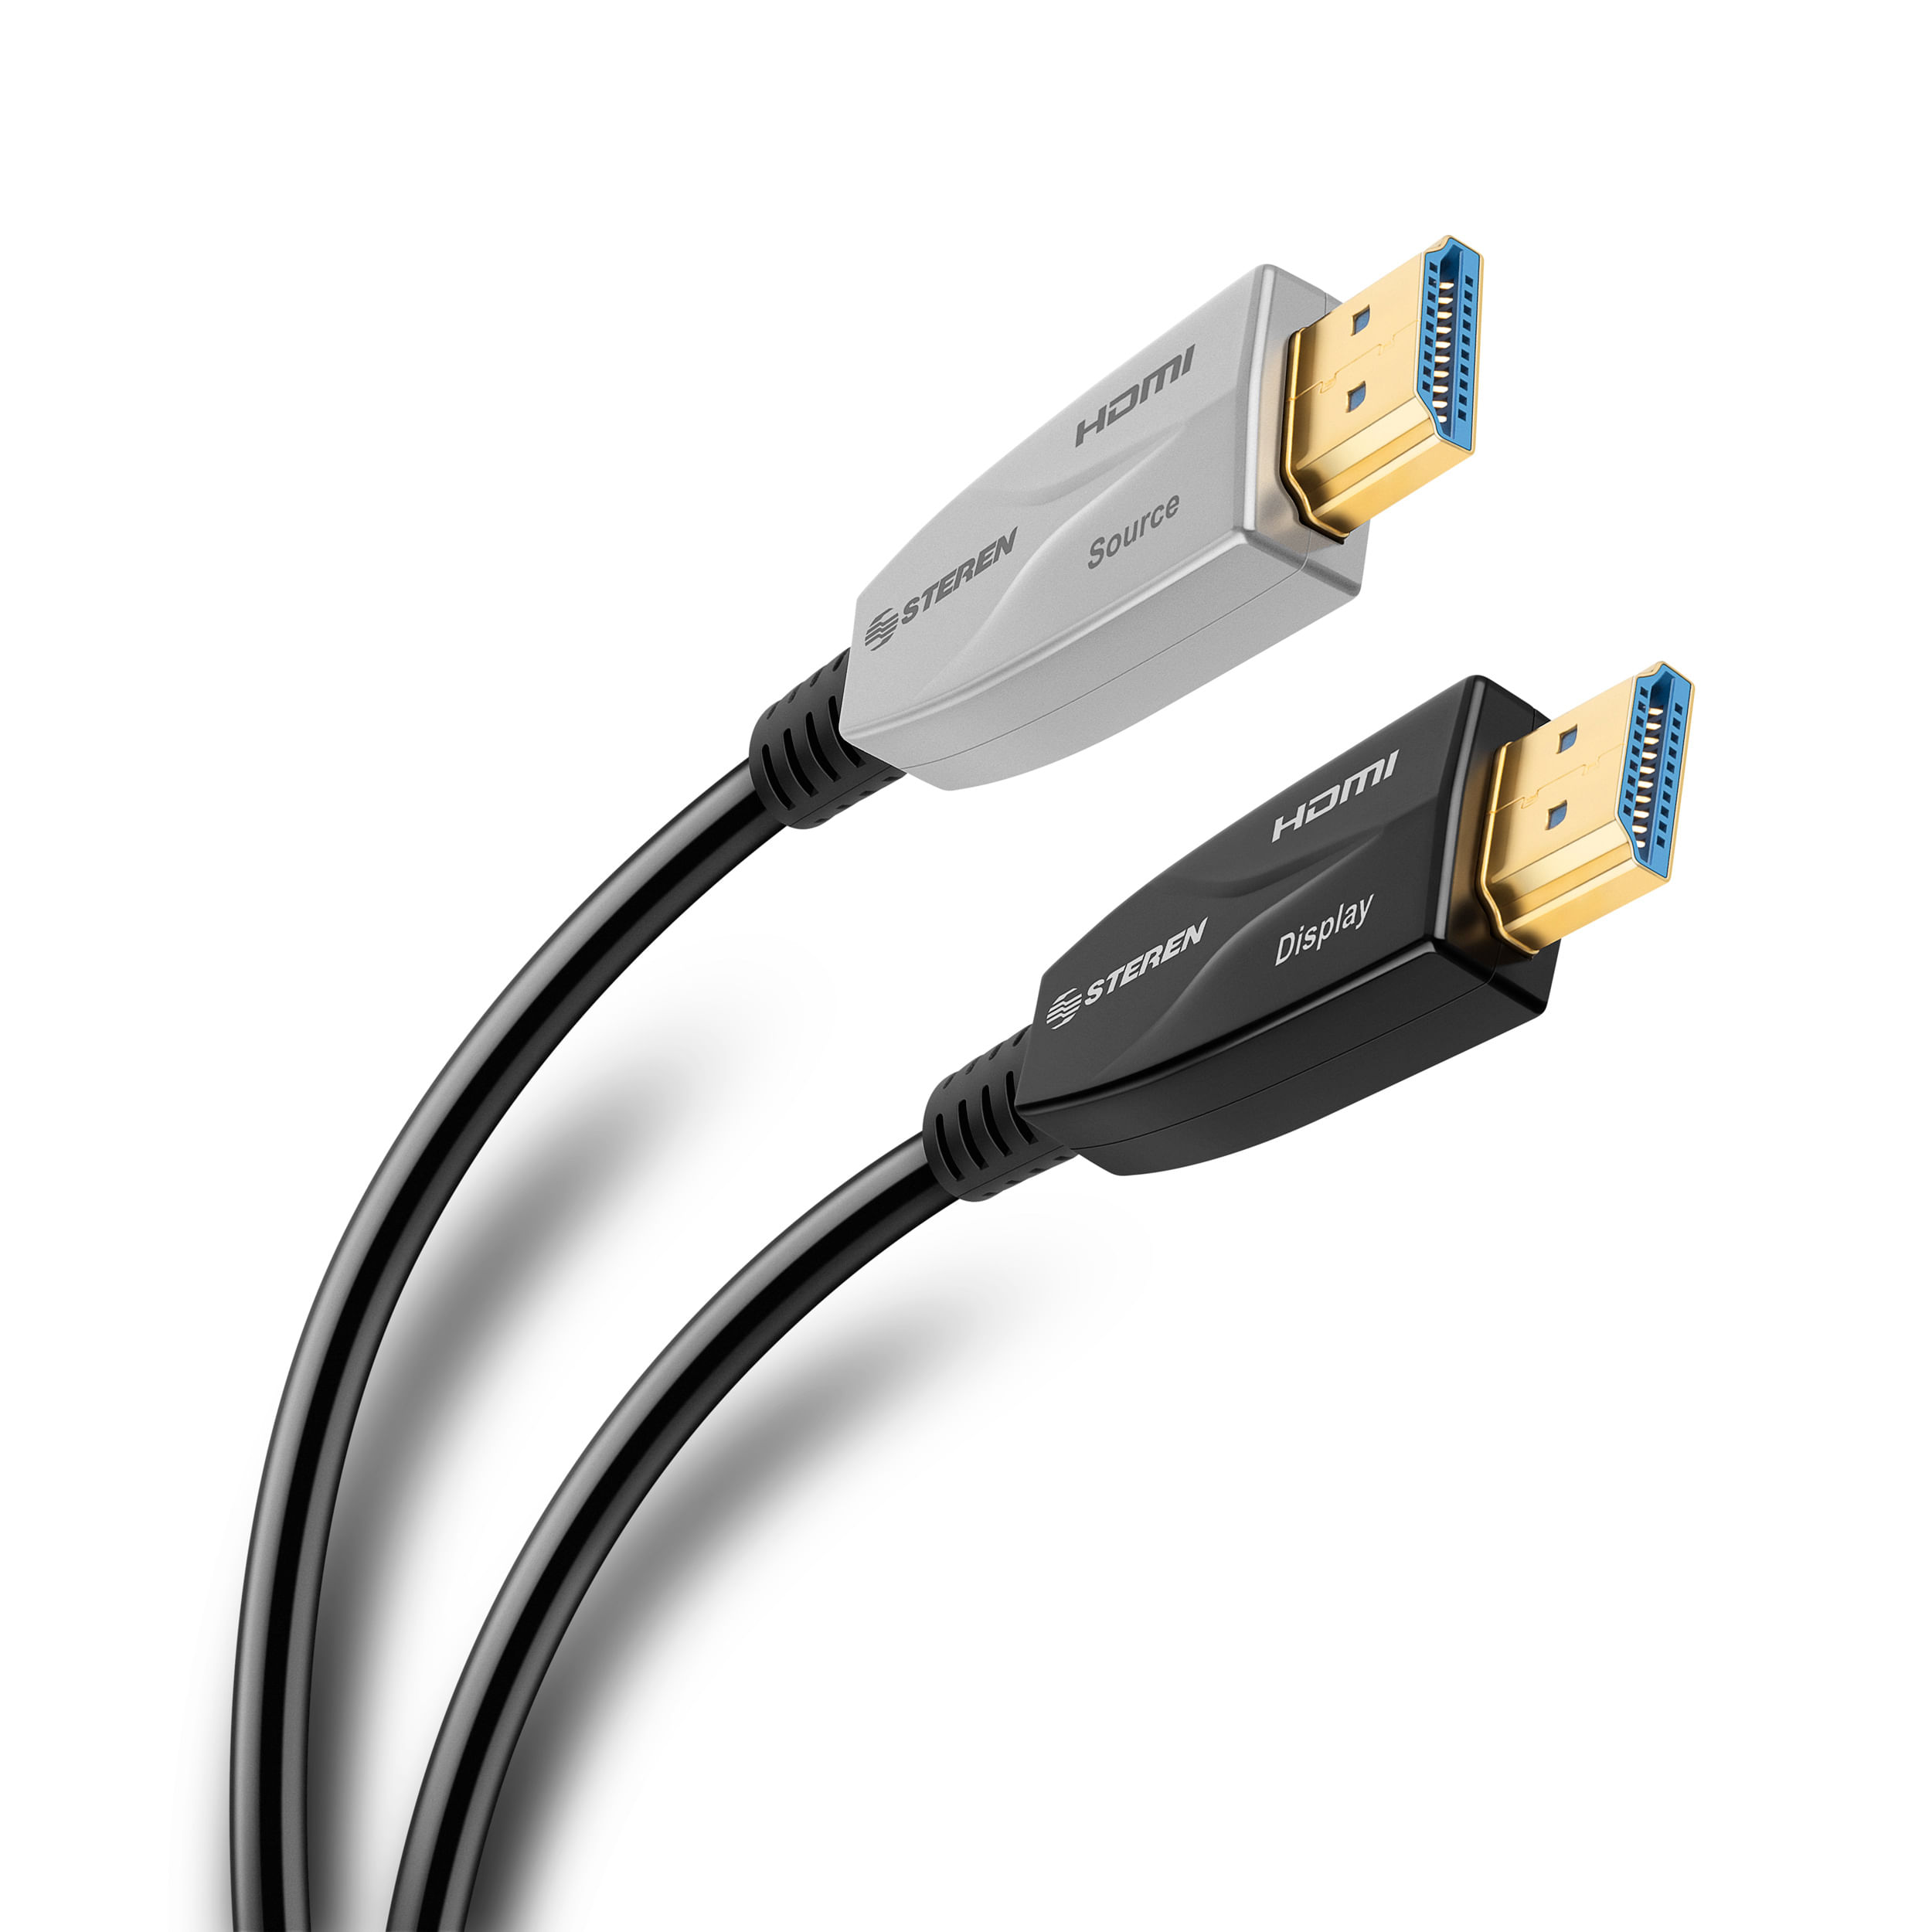 Cable HDMI 4K de fibra óptica, 30 m Steren Tienda en Lí